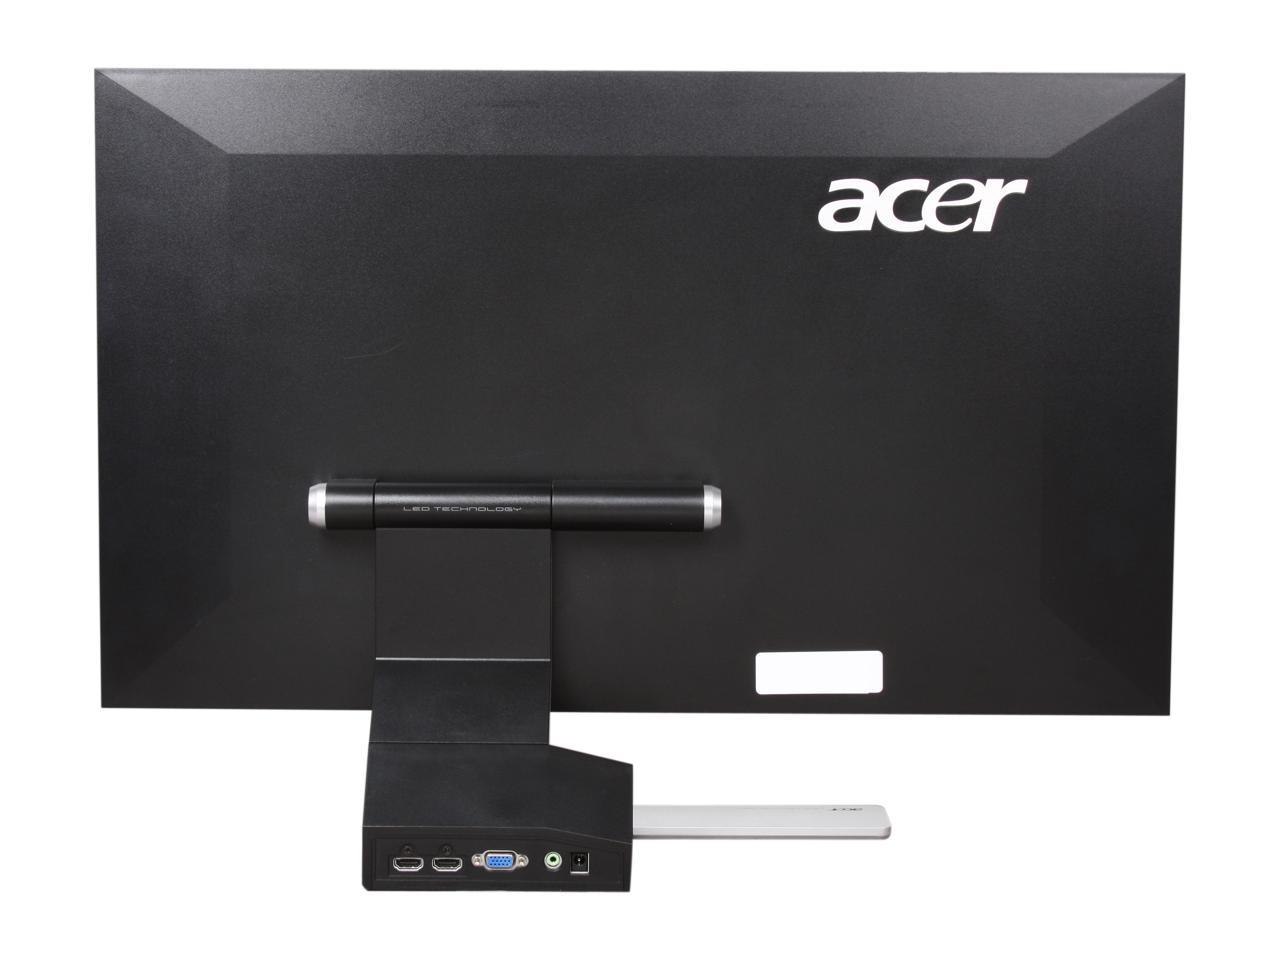 Acer S Series S273HL bmii Black 27